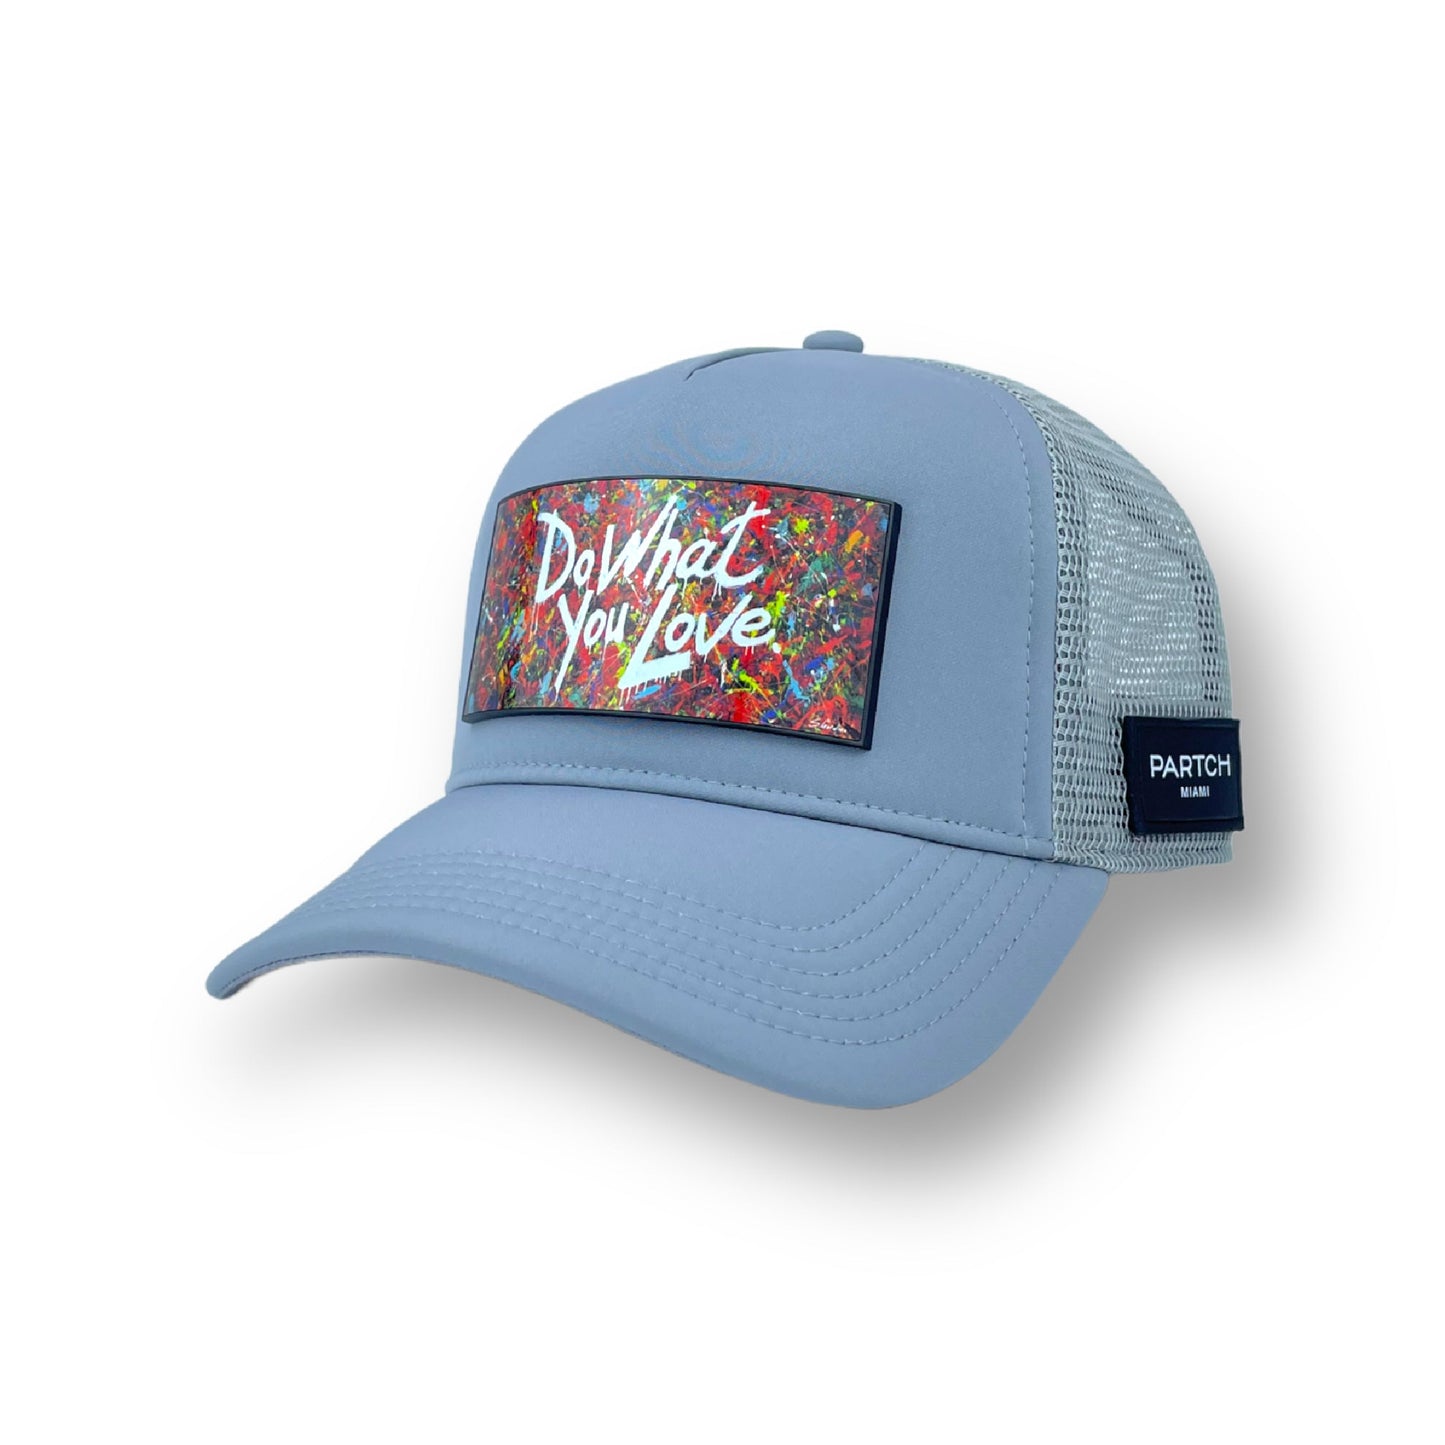 Partch | Do What You Love Trucker Hats Luxury Designer Hat Fashion Trucker Caps | PARTCH clip removable